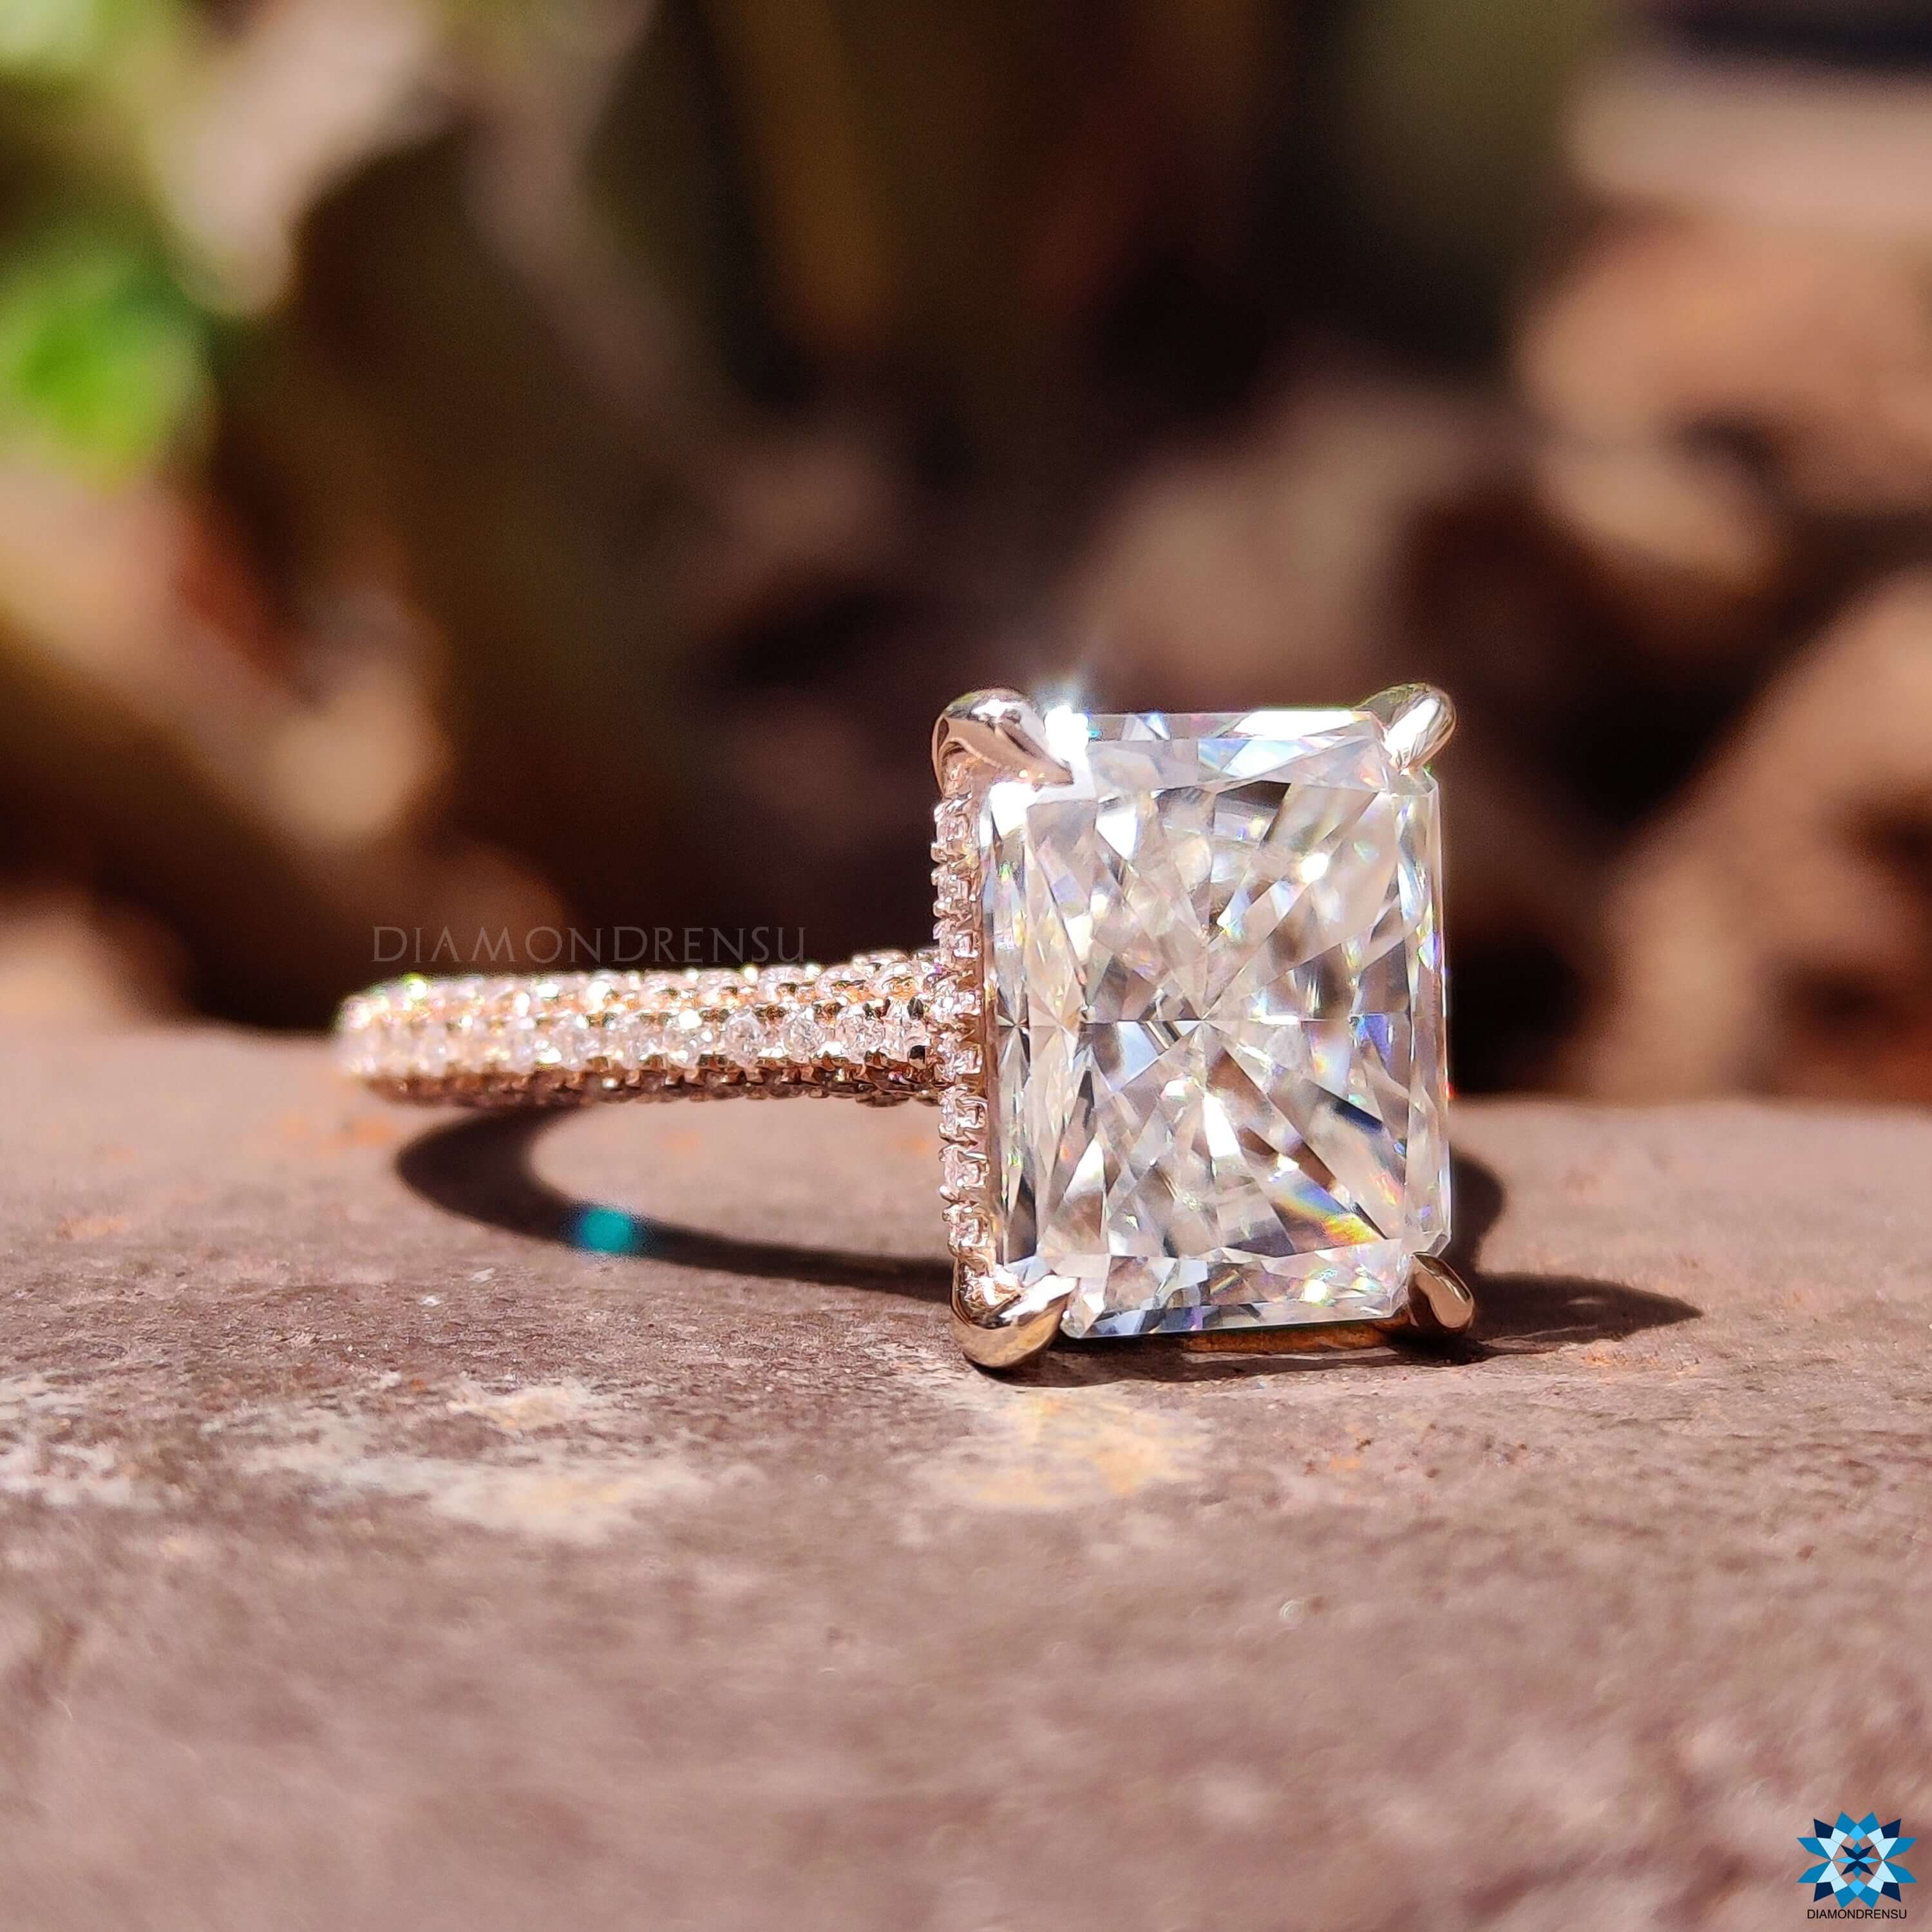 radiant cut engagement ring - diamondrensu